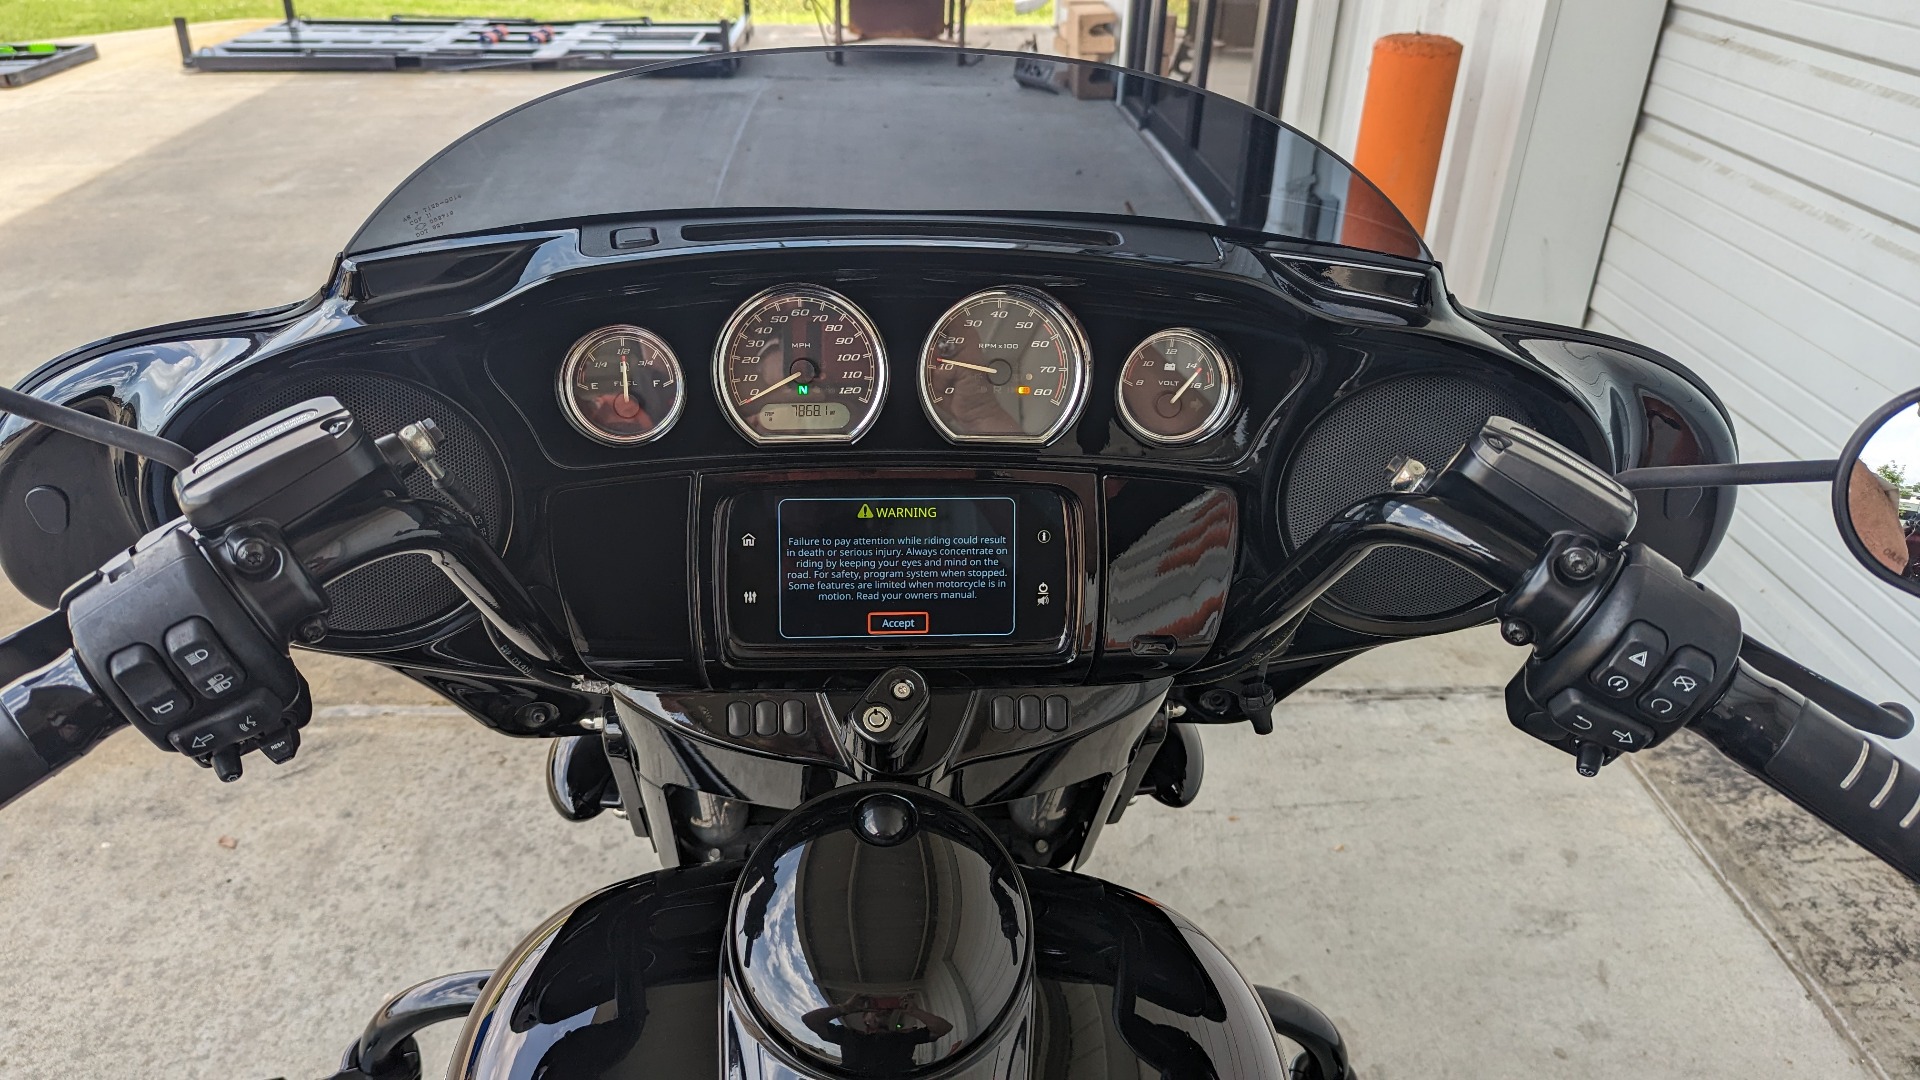 2019 Harley-Davidson Street Glide® Special in Monroe, Louisiana - Photo 5